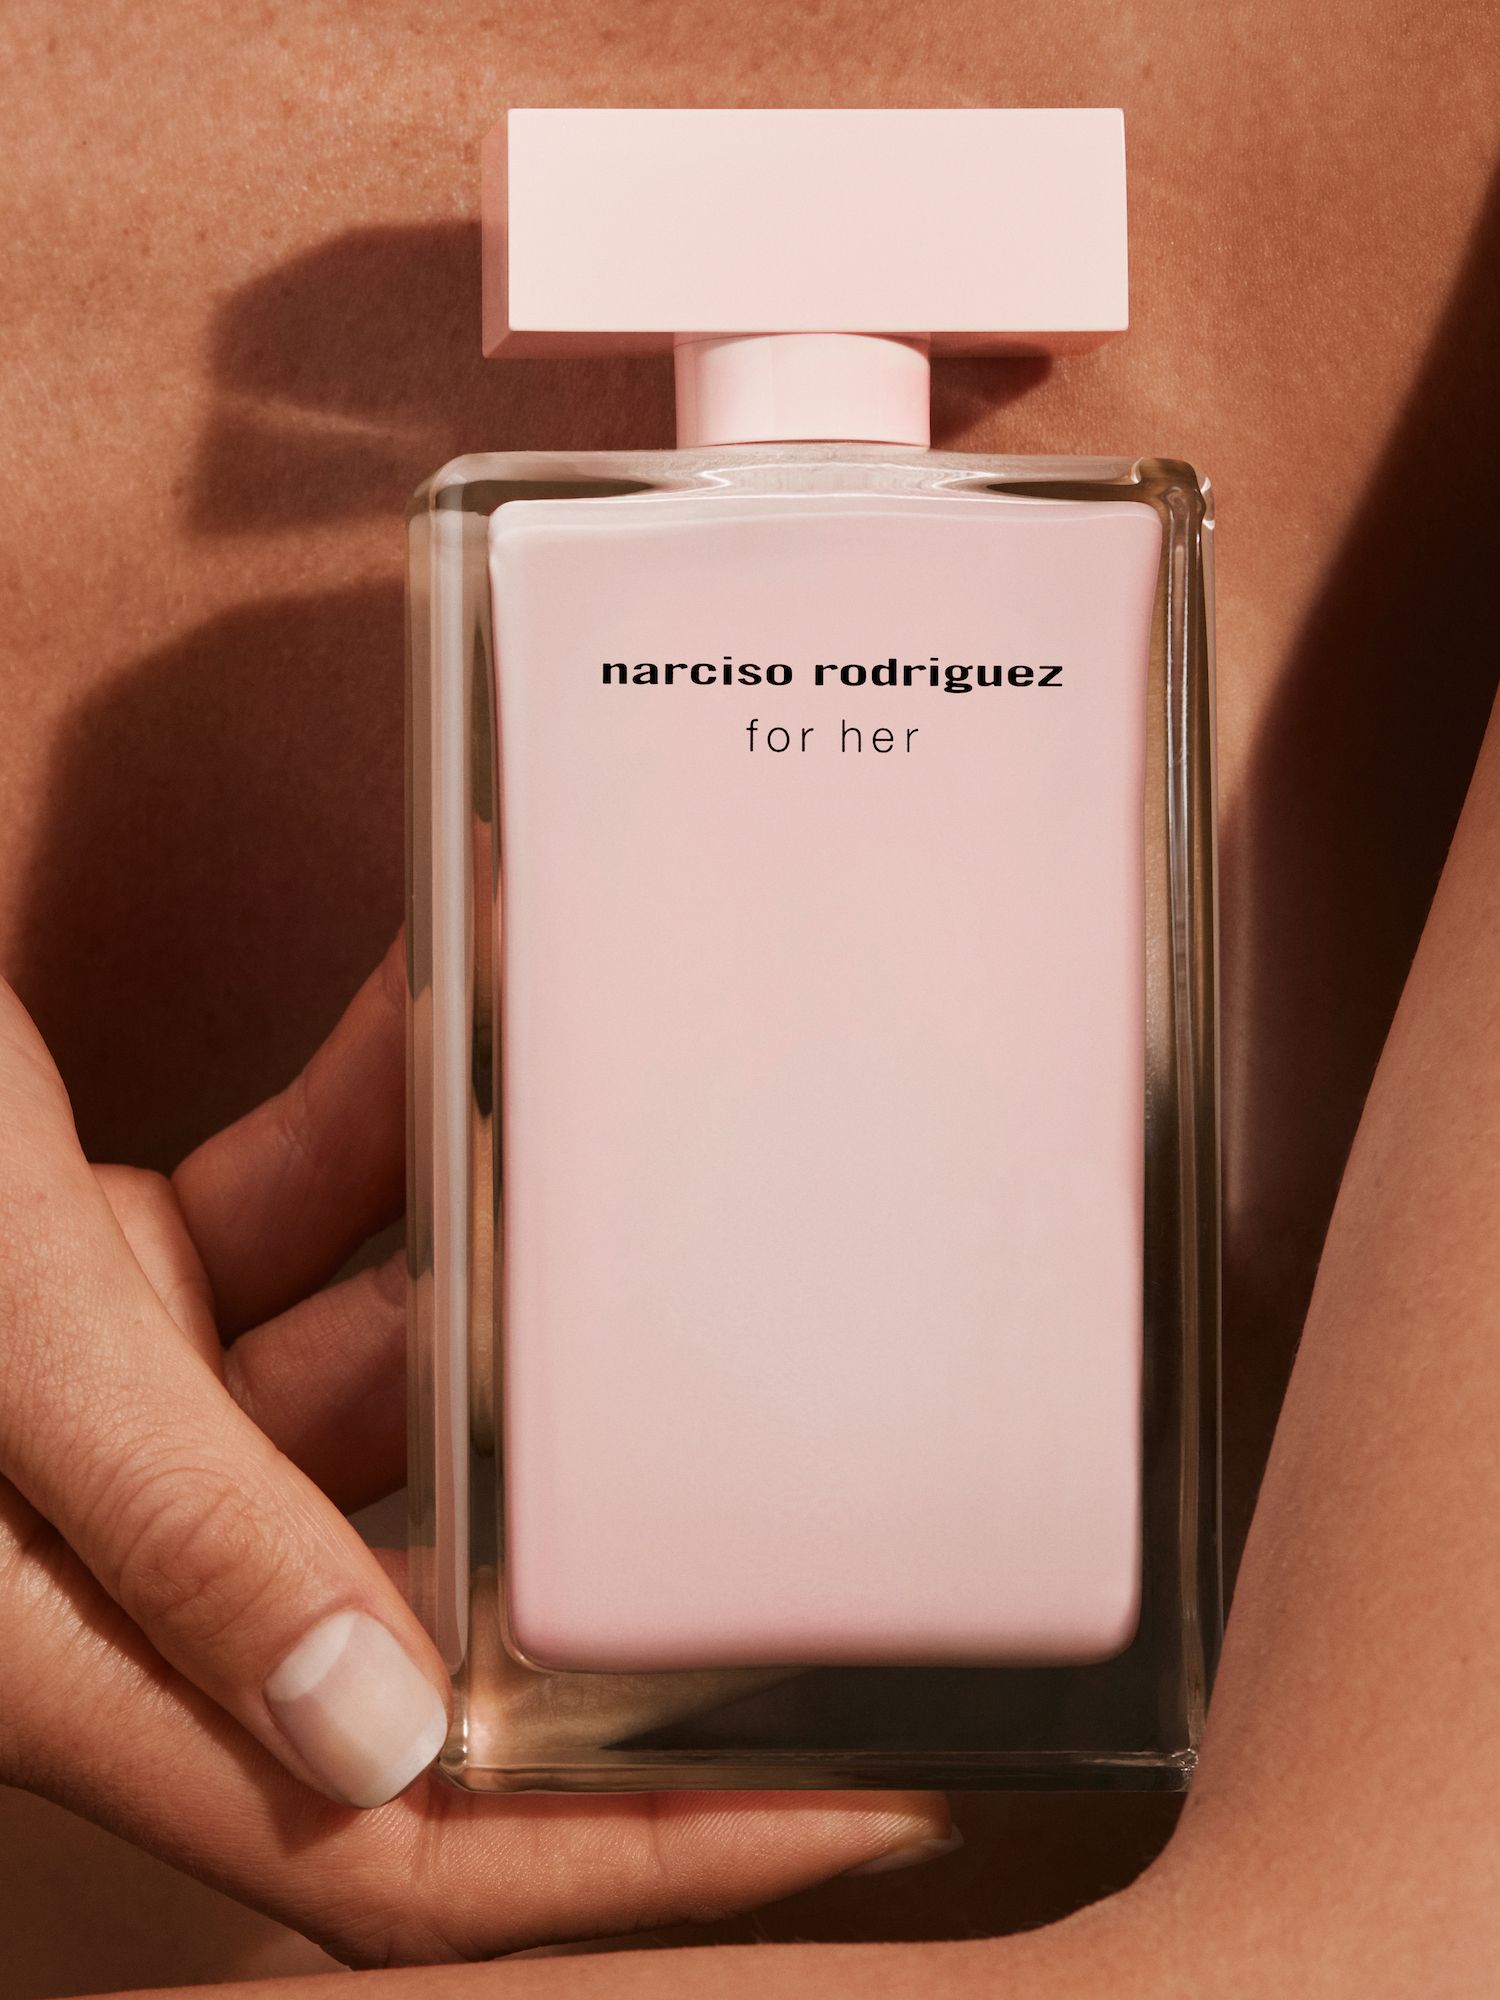 Rodriguez Her Narciso & John Lewis Eau Parfum, de at 30ml for Partners